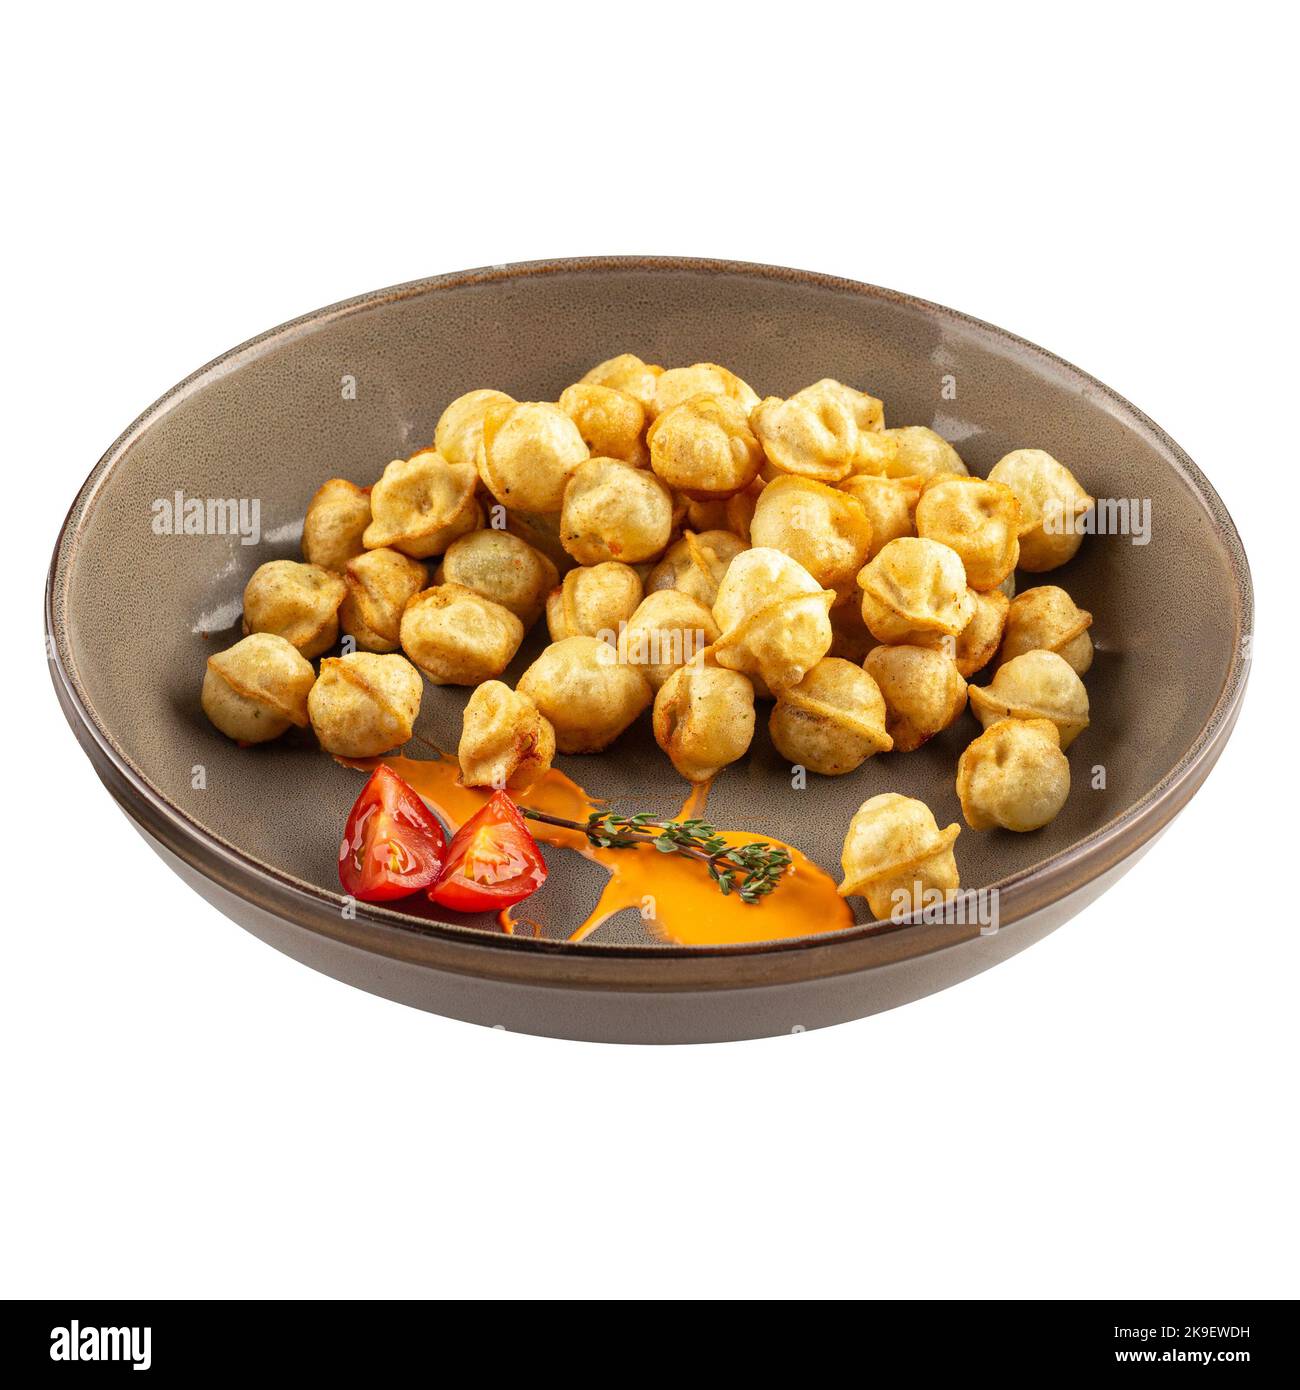 Portion of fried pelmeni dumplings with sauce Stock Photo